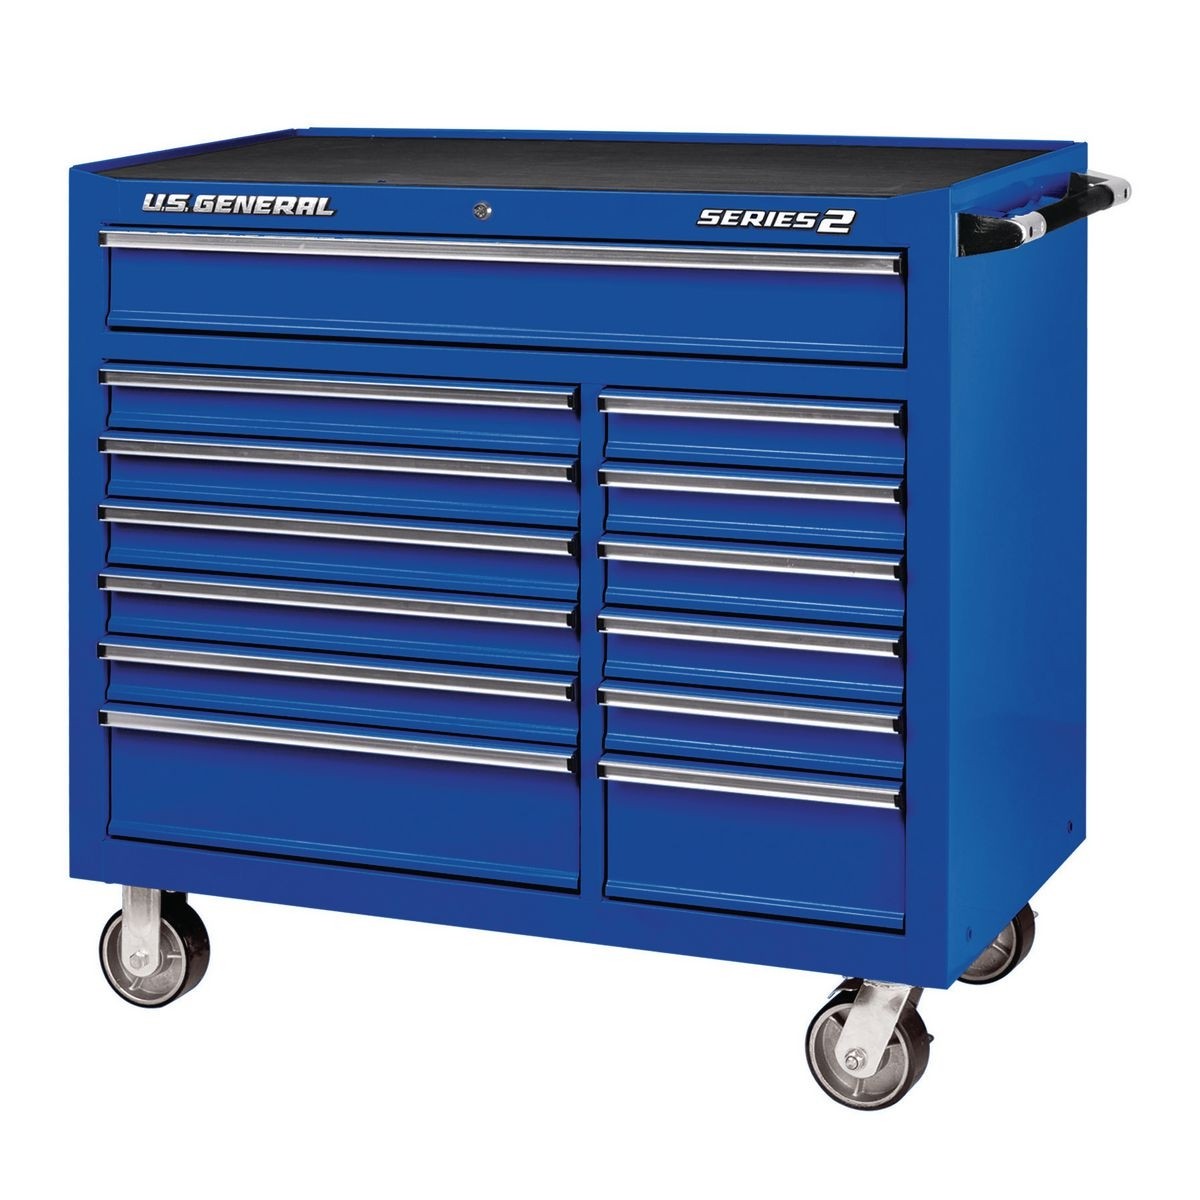 U.S. GENERAL 44 in. x 22 In. Double Bank Roller Cabinet – Blue – Item